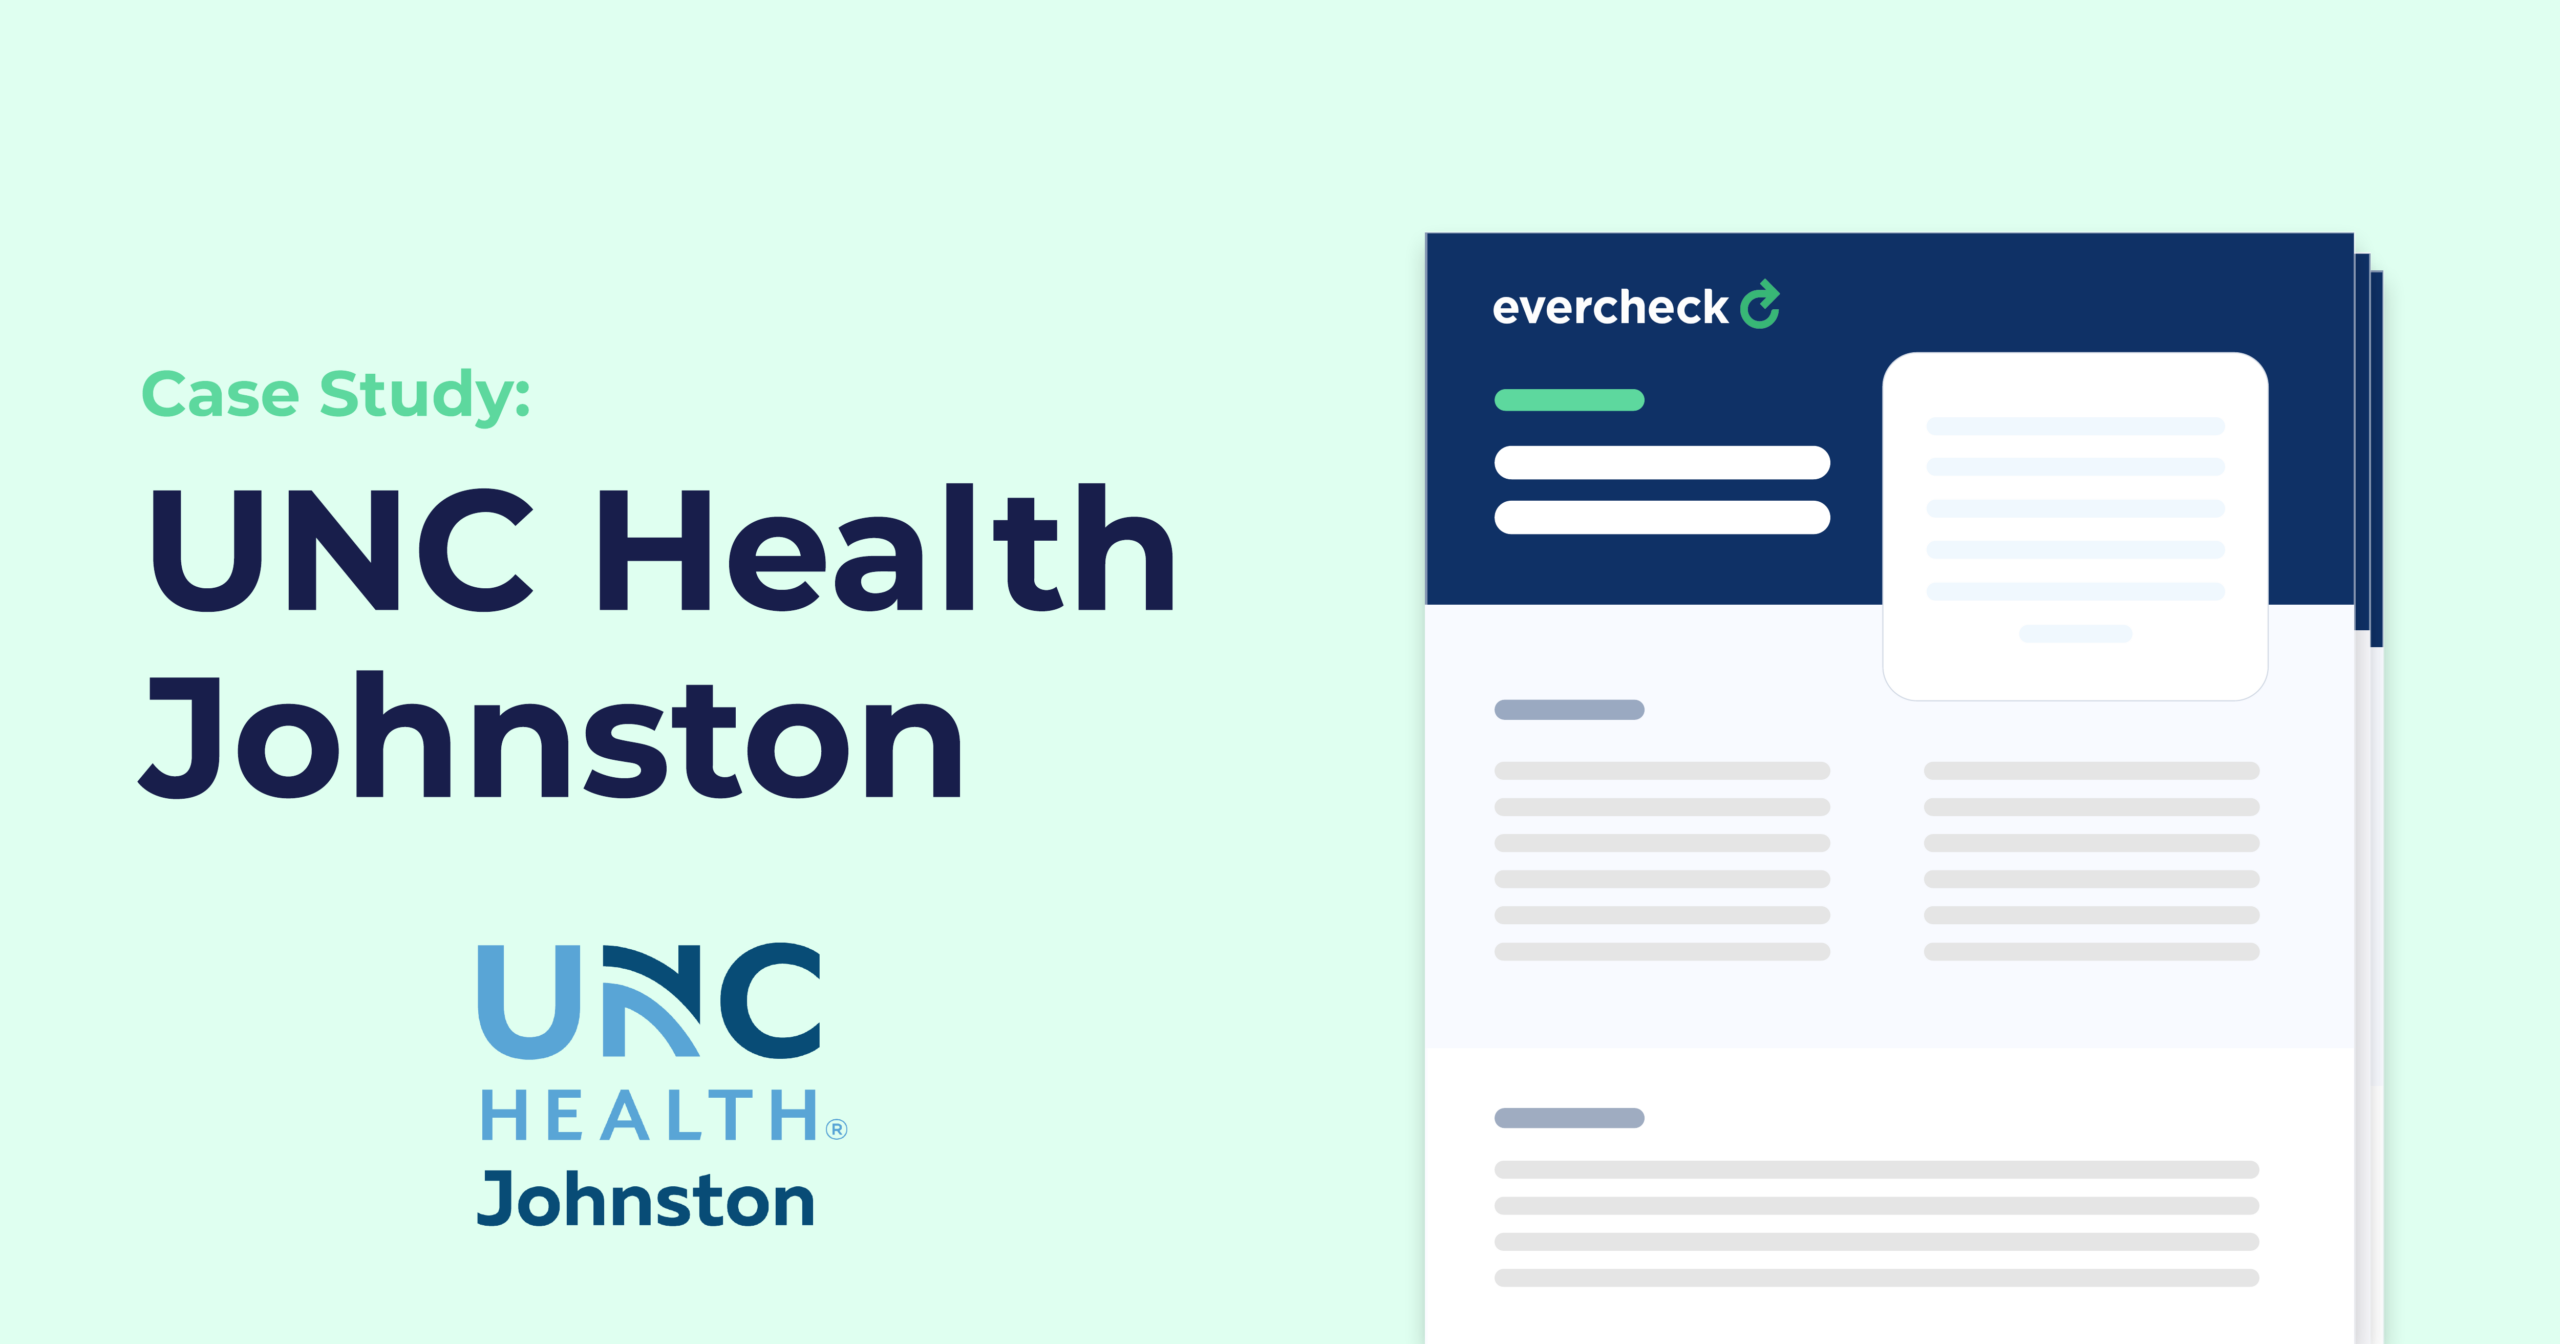 Case Study: UNC Health Johnston